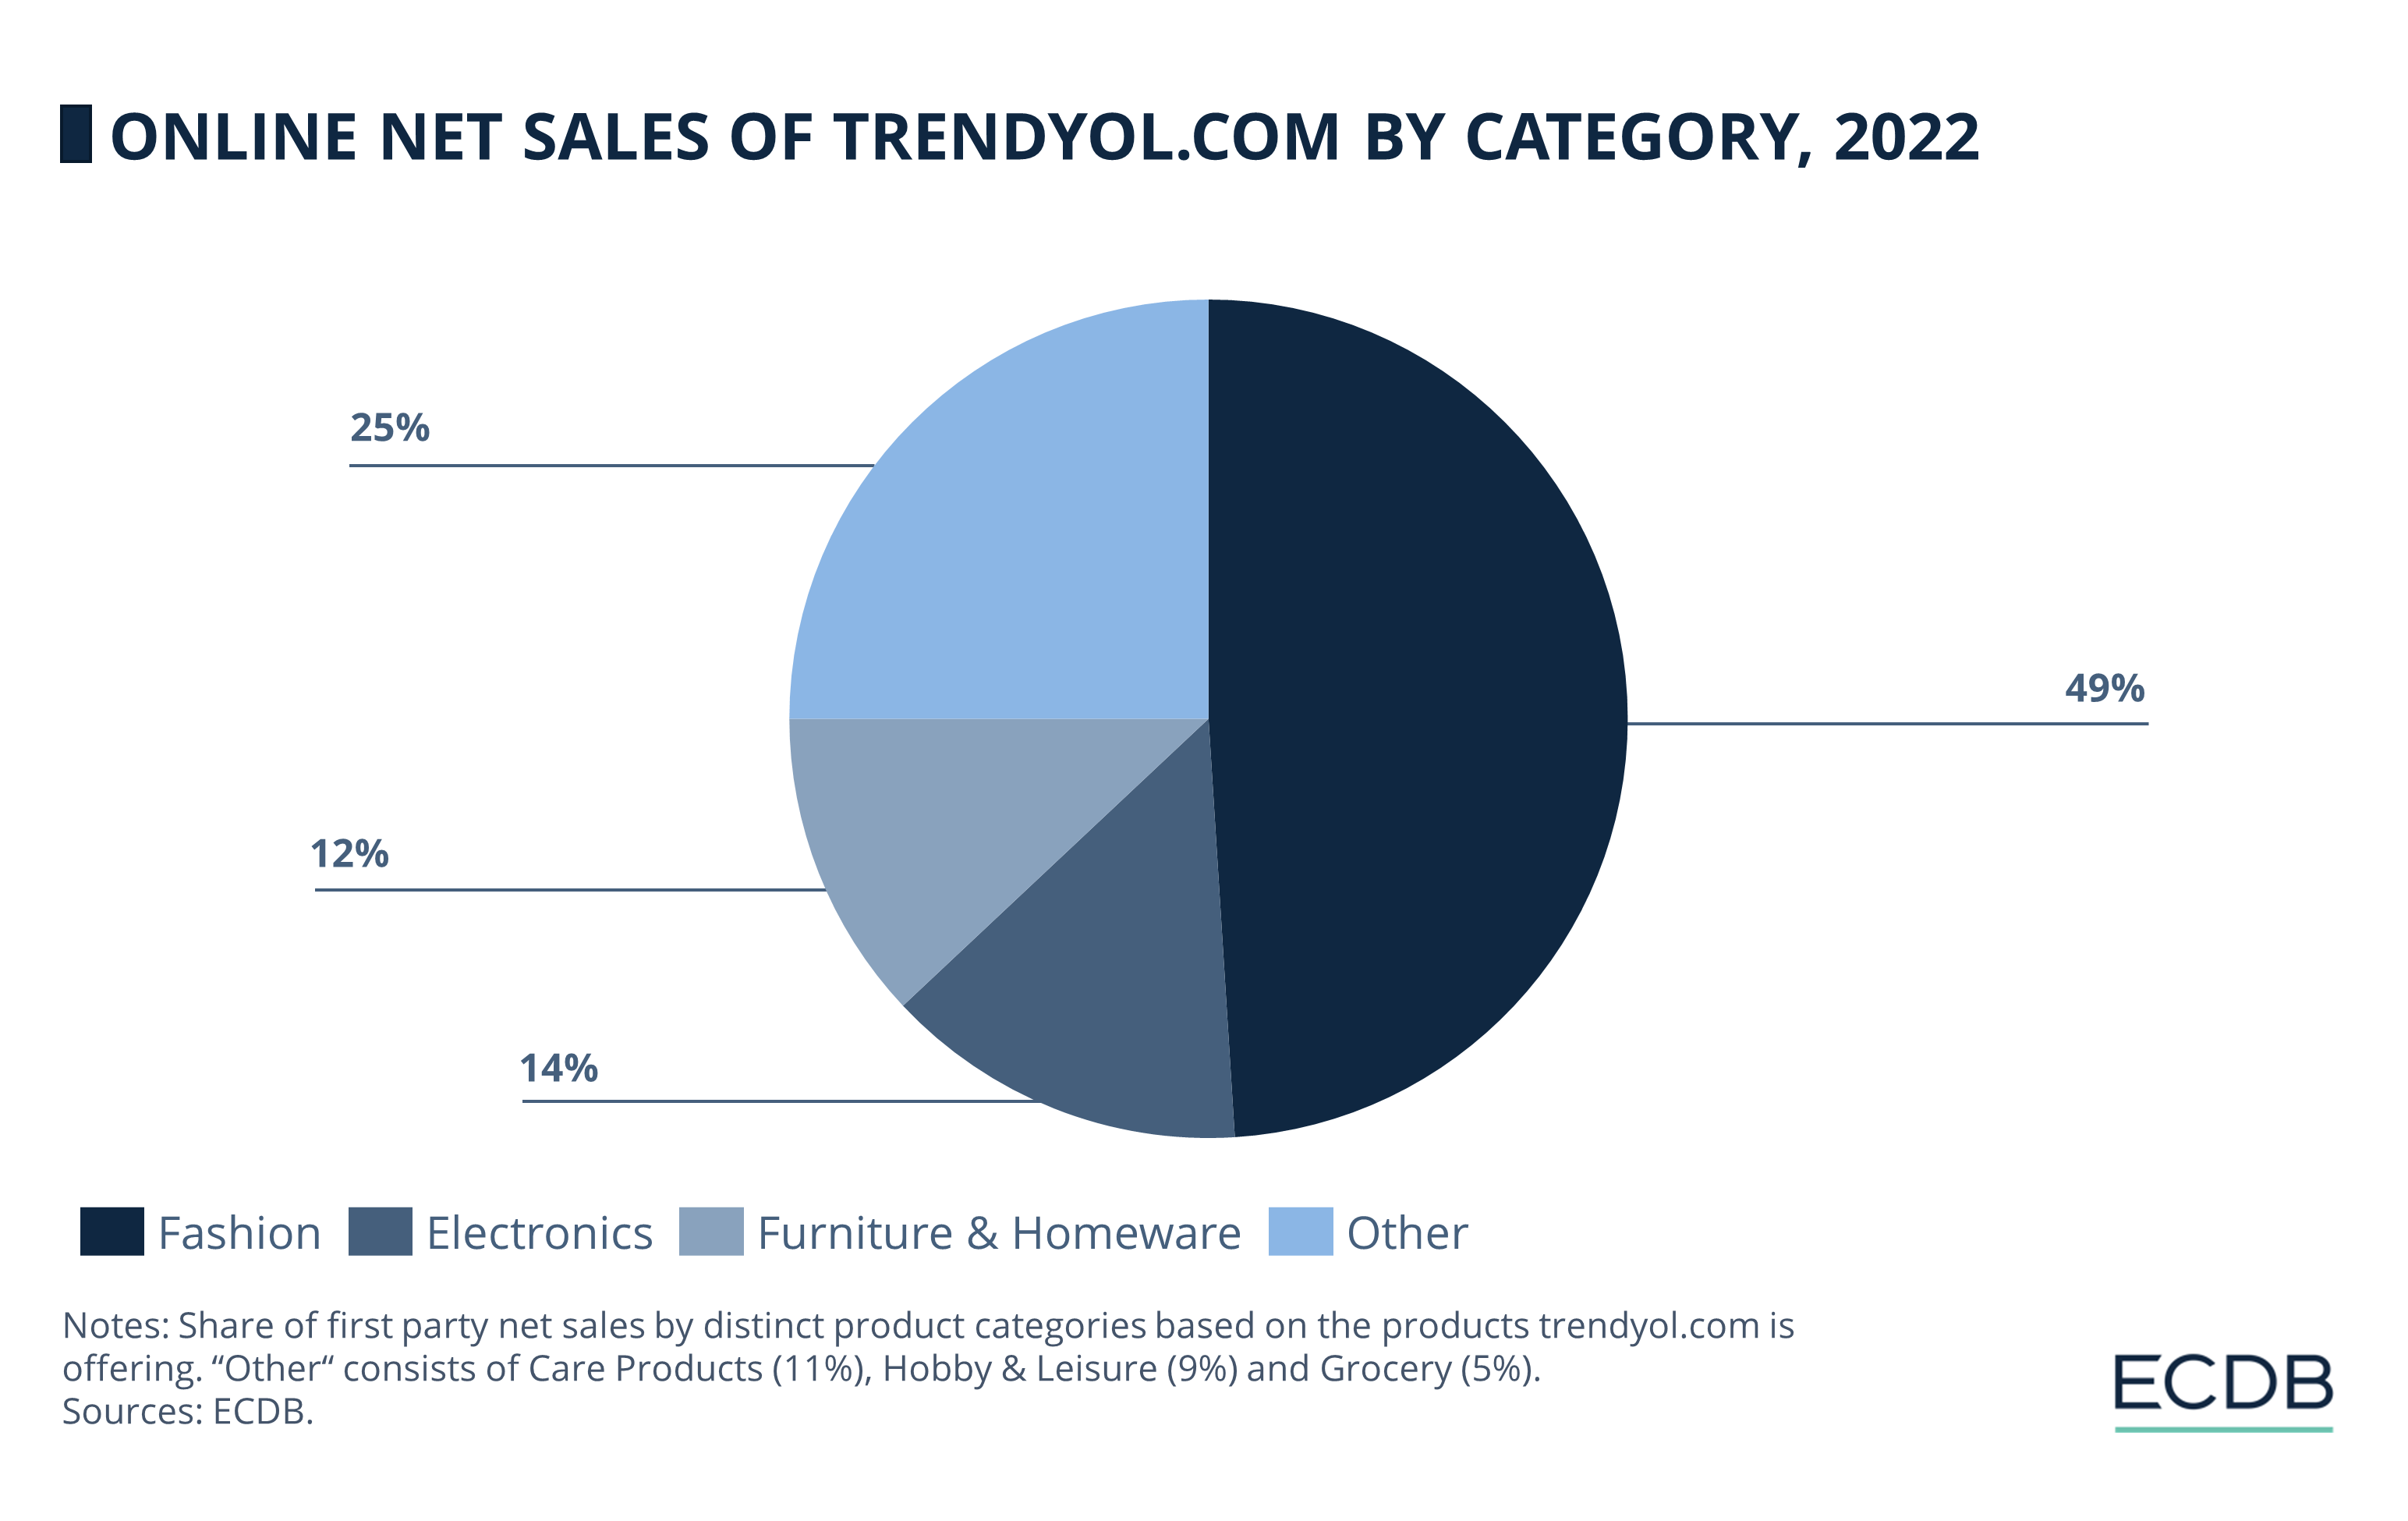 Online Net Sales of Trendyol.com by Category, 2022